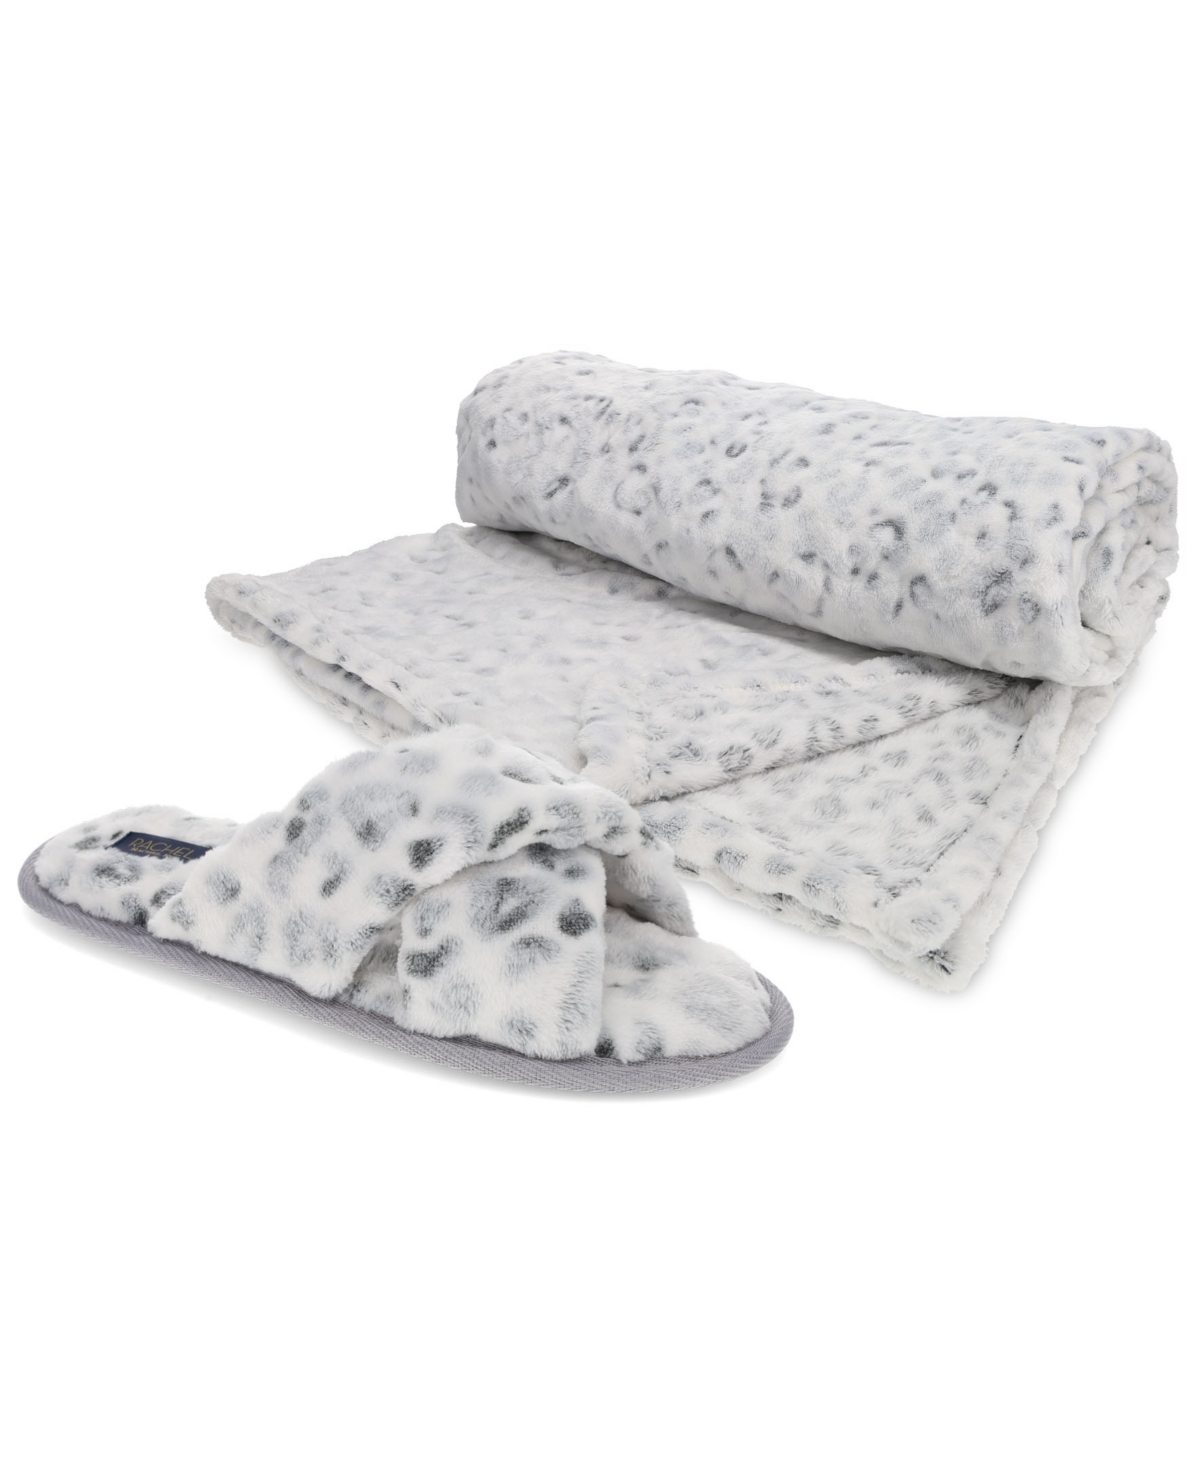 Women's Gift Set with X-Band Plush Slipper and Cheetah Blanket Set - Gray Cheetah Print